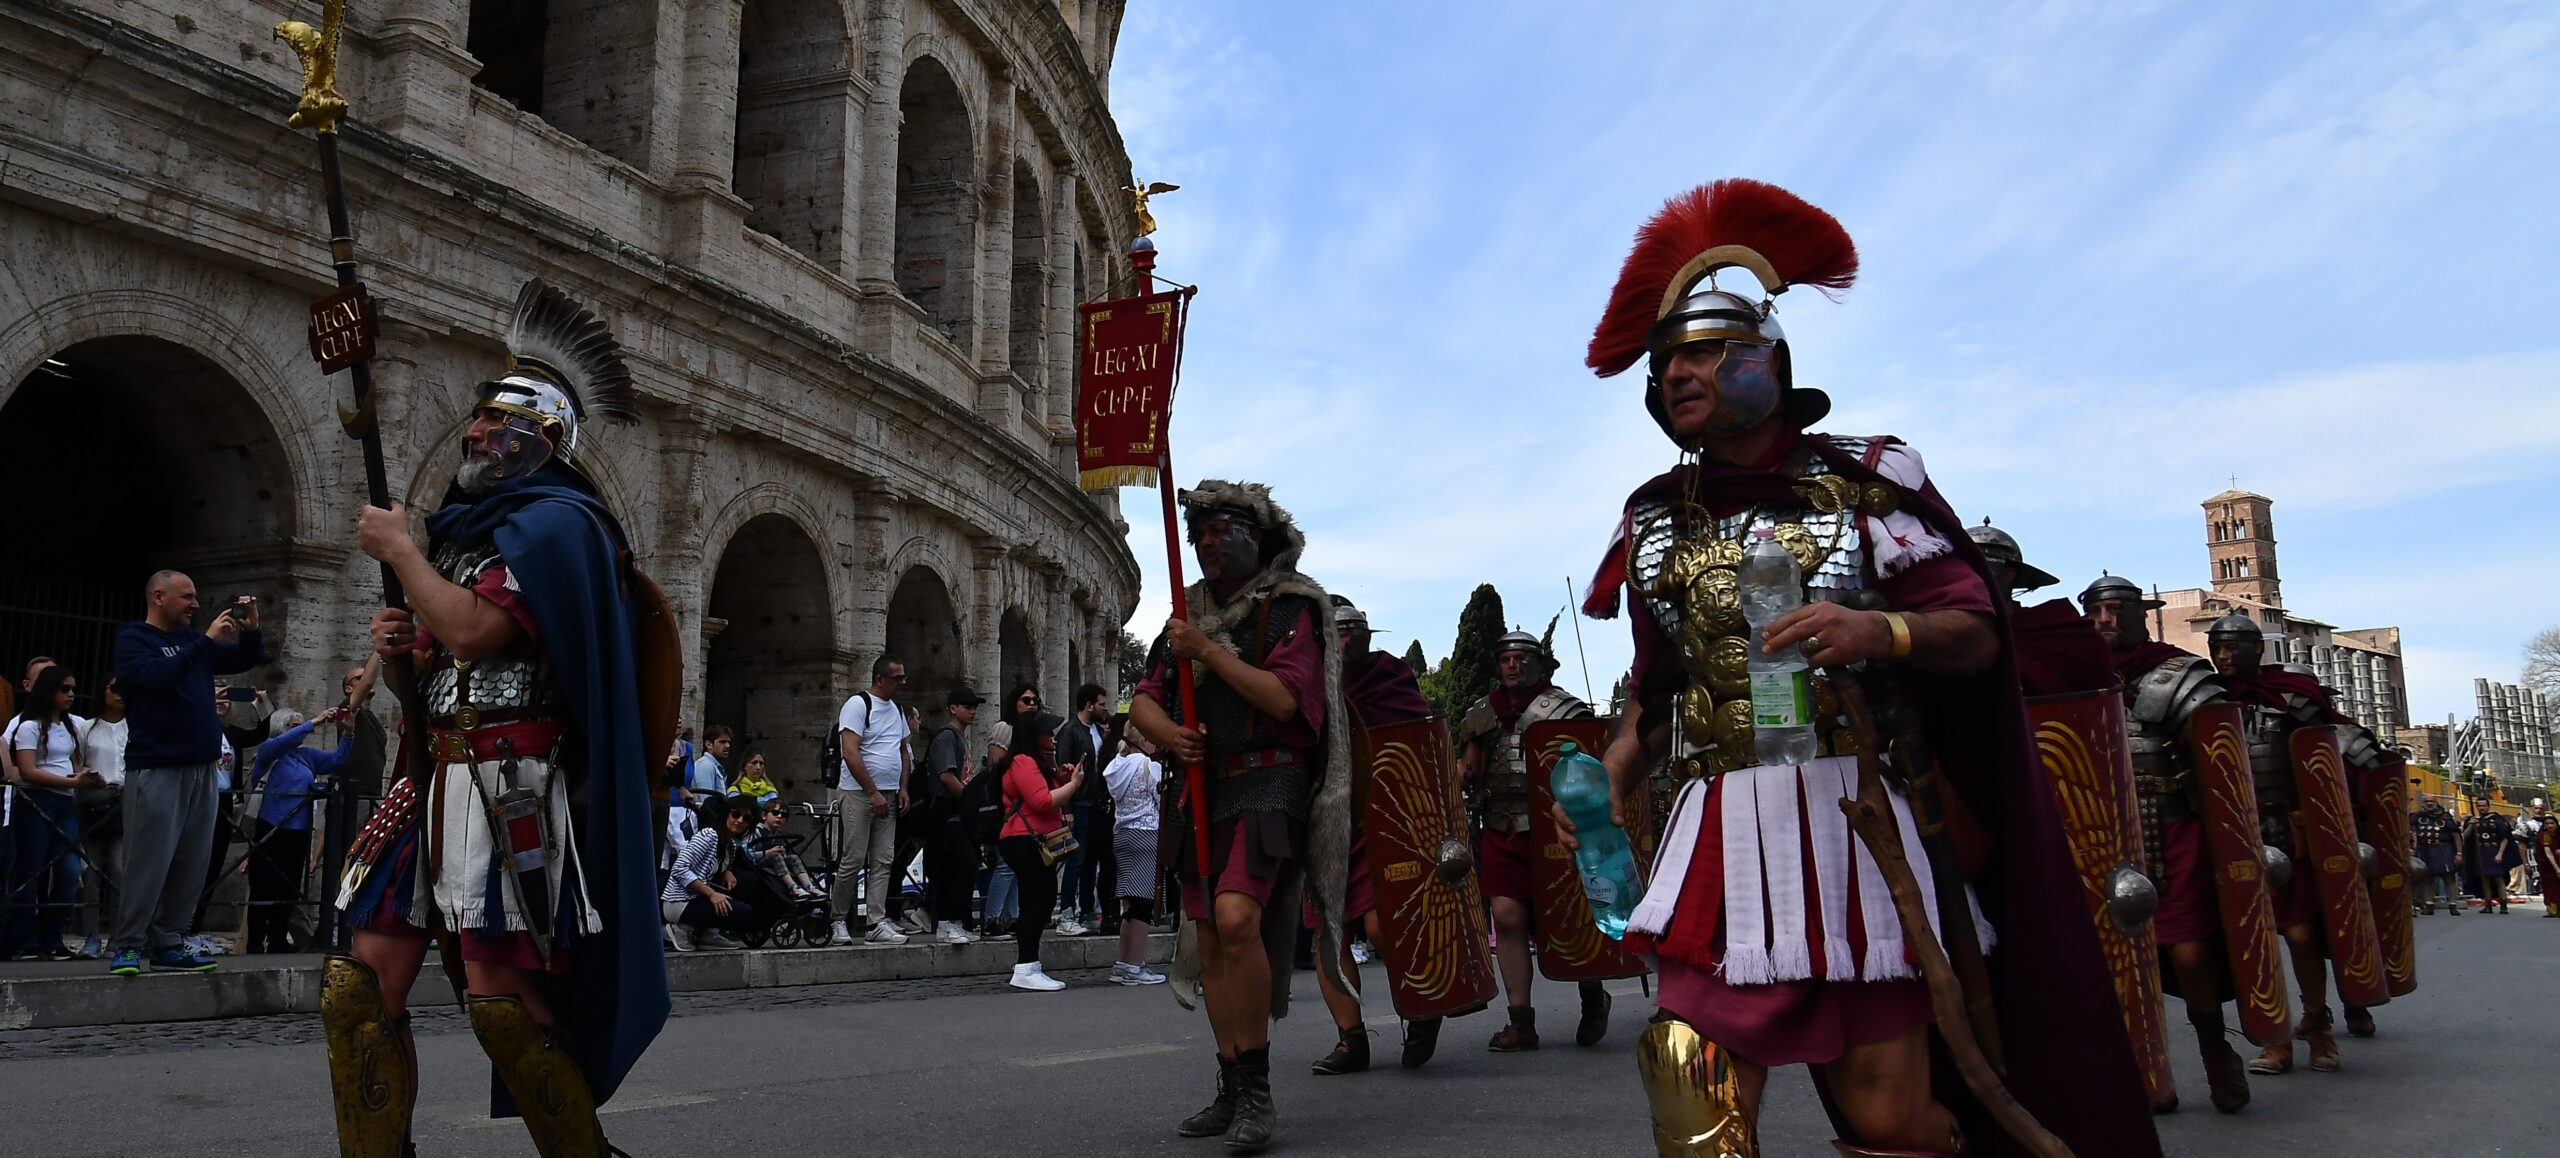 « Natale di Roma » : quand Rome fête sa naissance